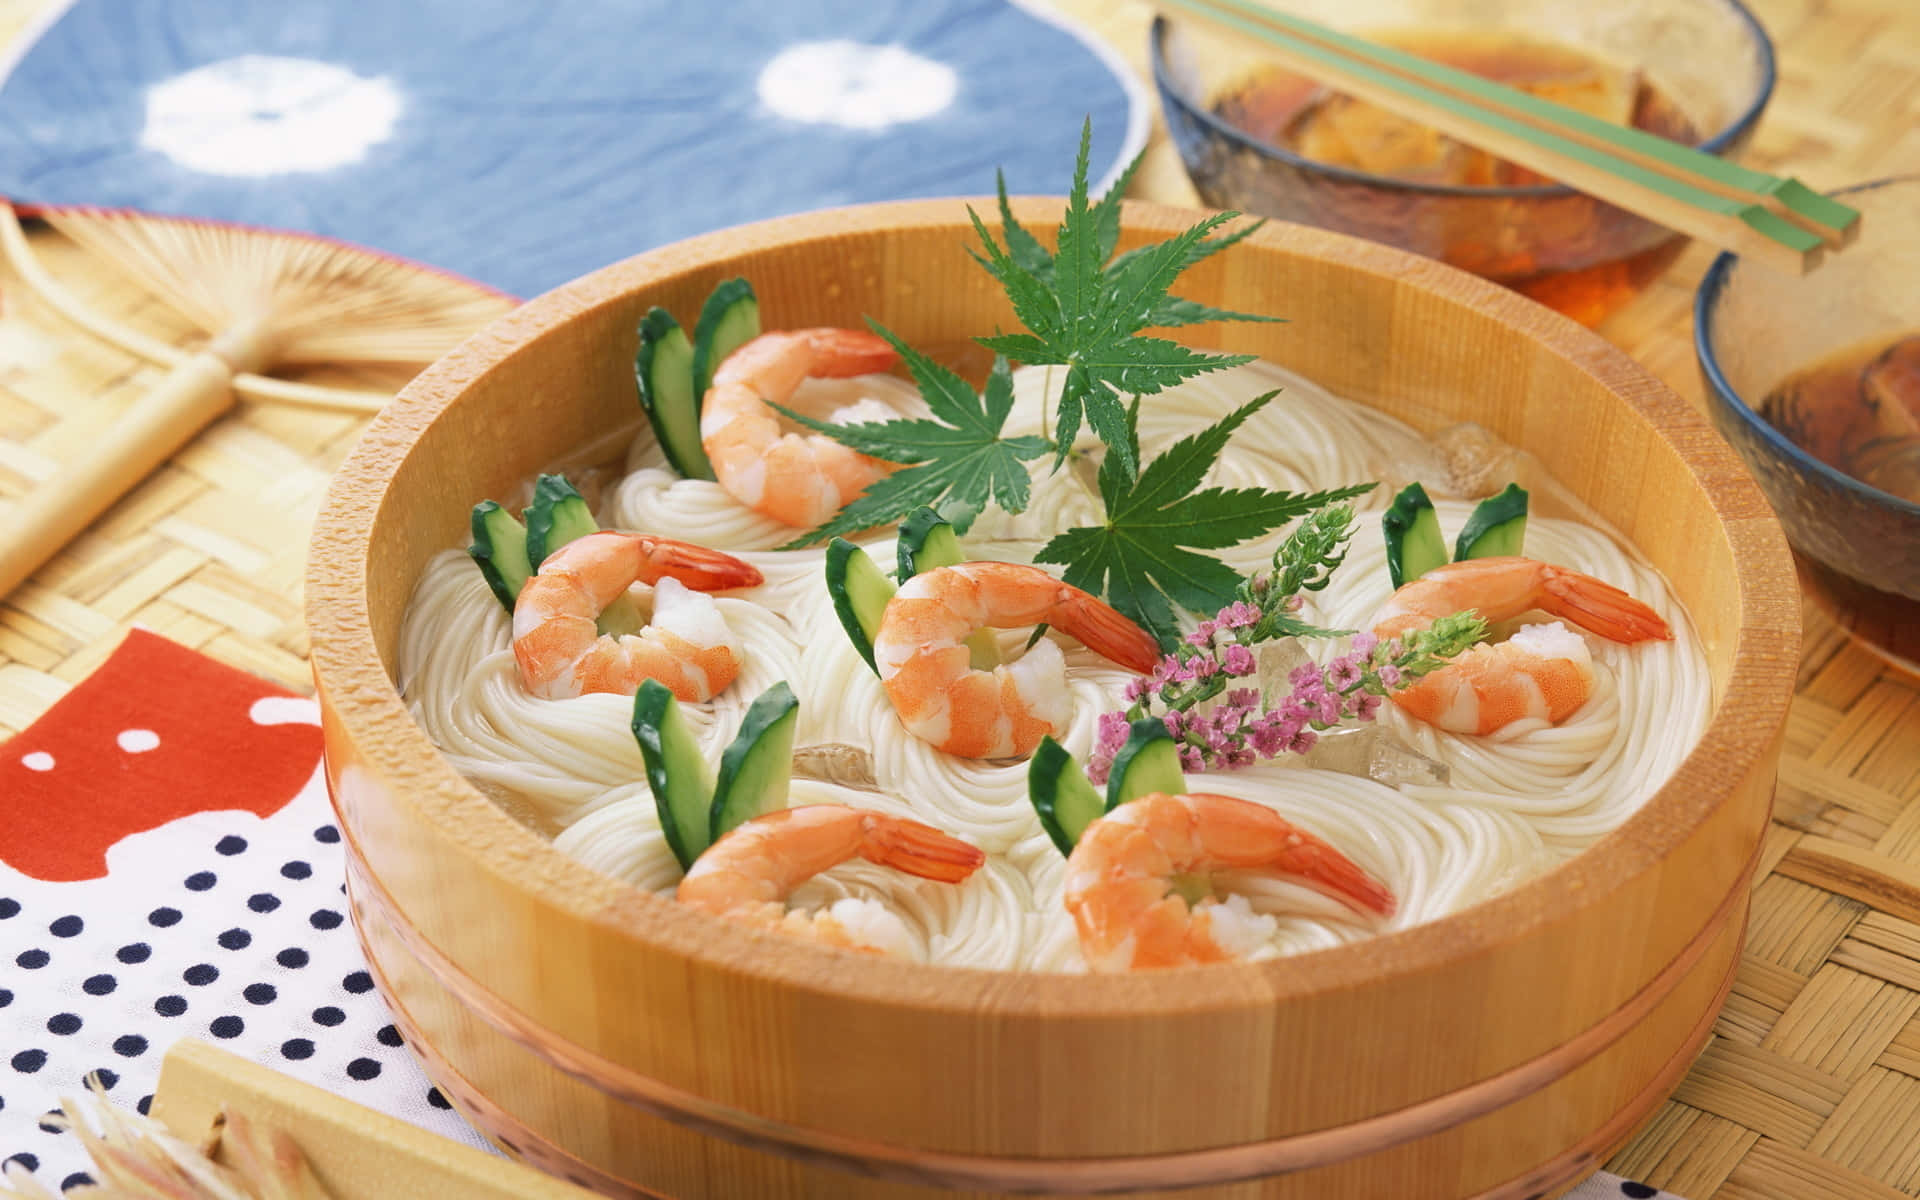 A Bowl Of Shrimp And Vegetables